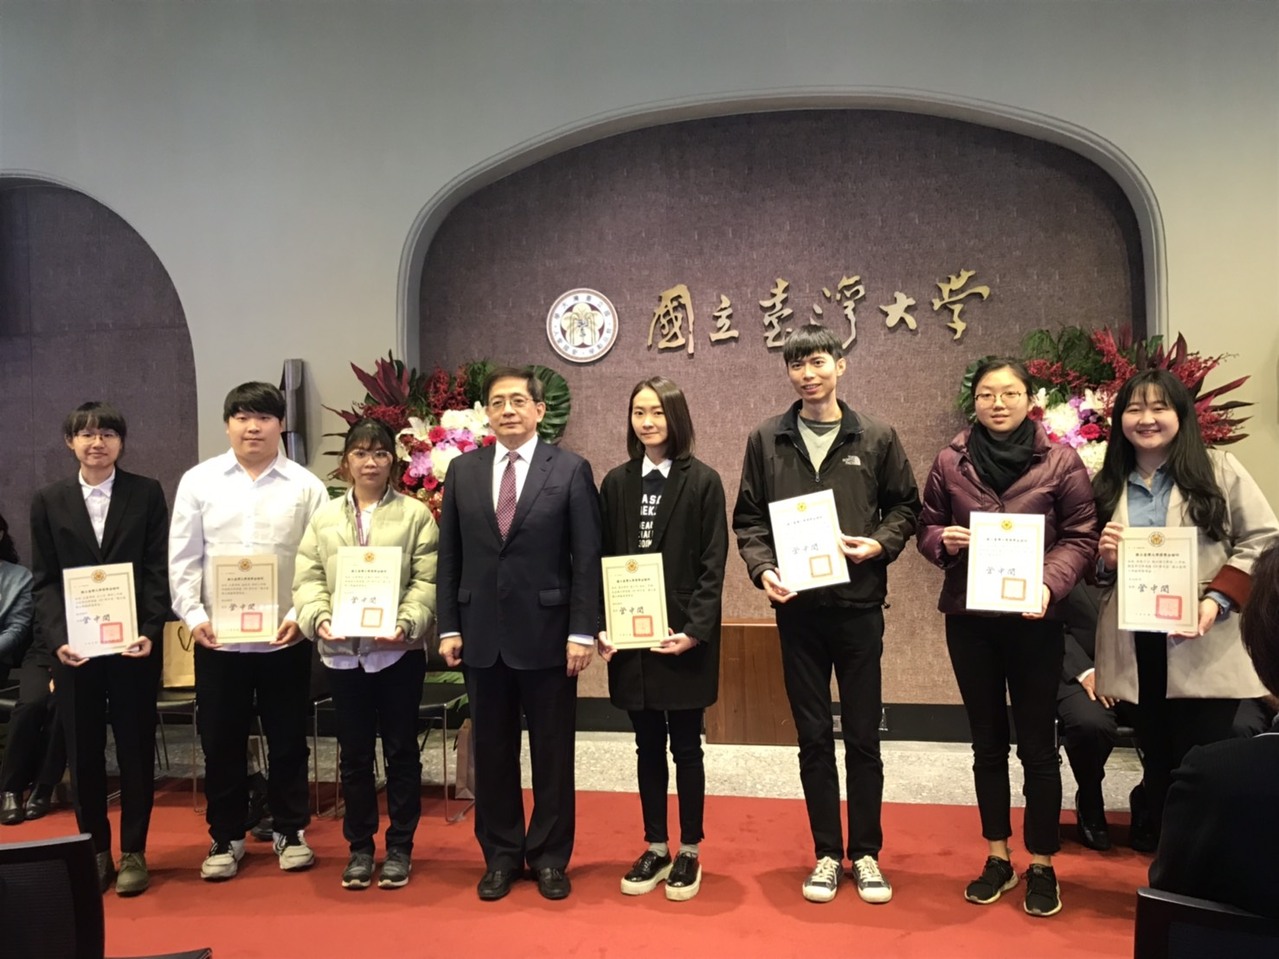 National Taiwan University holds "Various Scholarship Awards Ceremony" every year. (Photo / Provided by NTU)